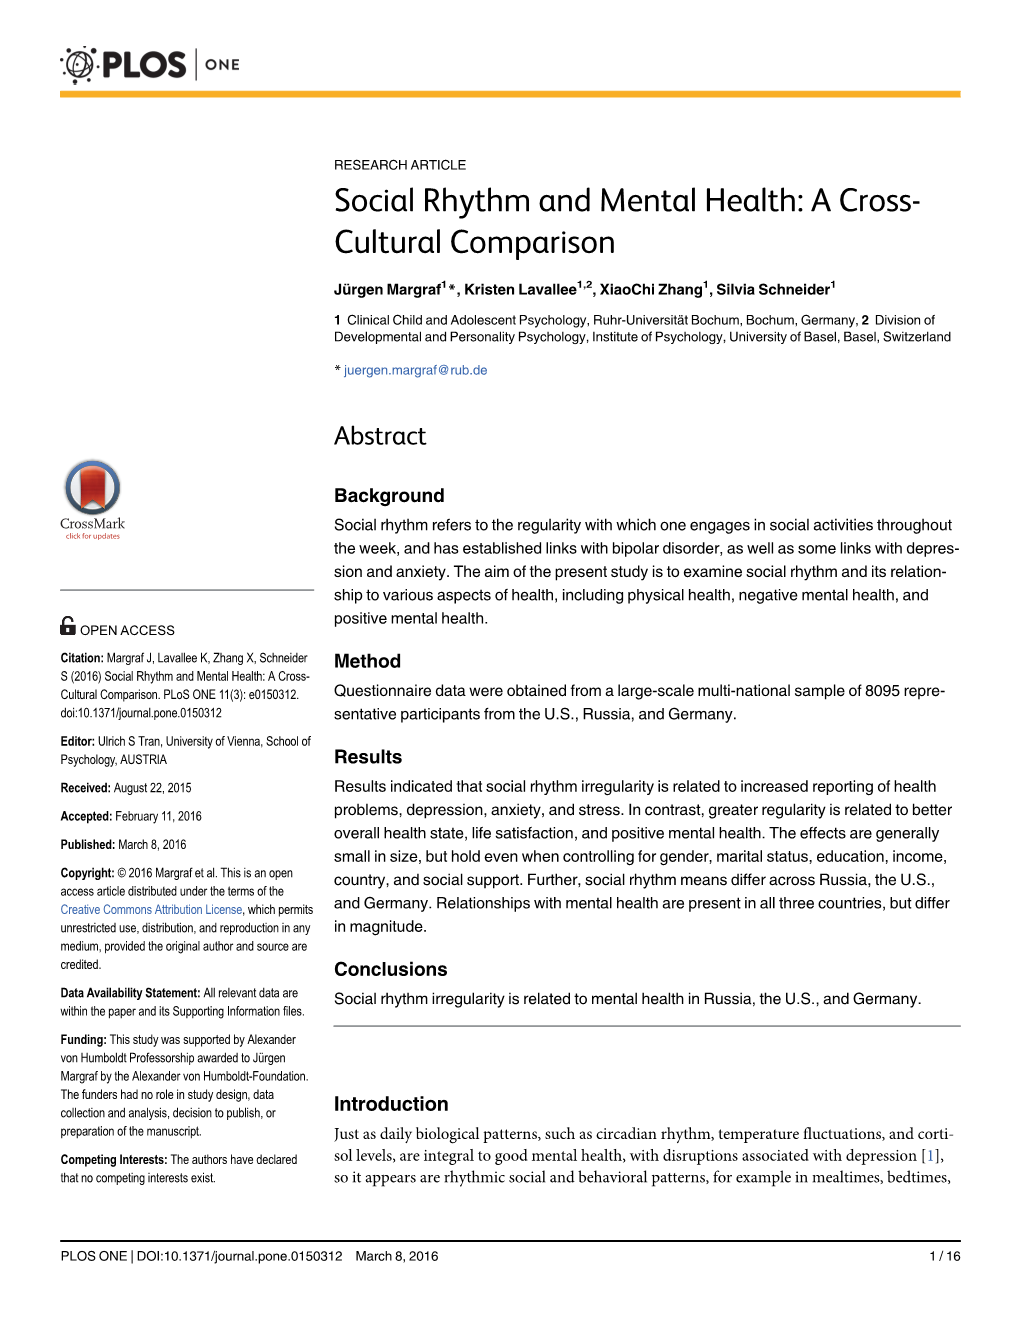 Social Rhythm and Mental Health: a Cross- Cultural Comparison